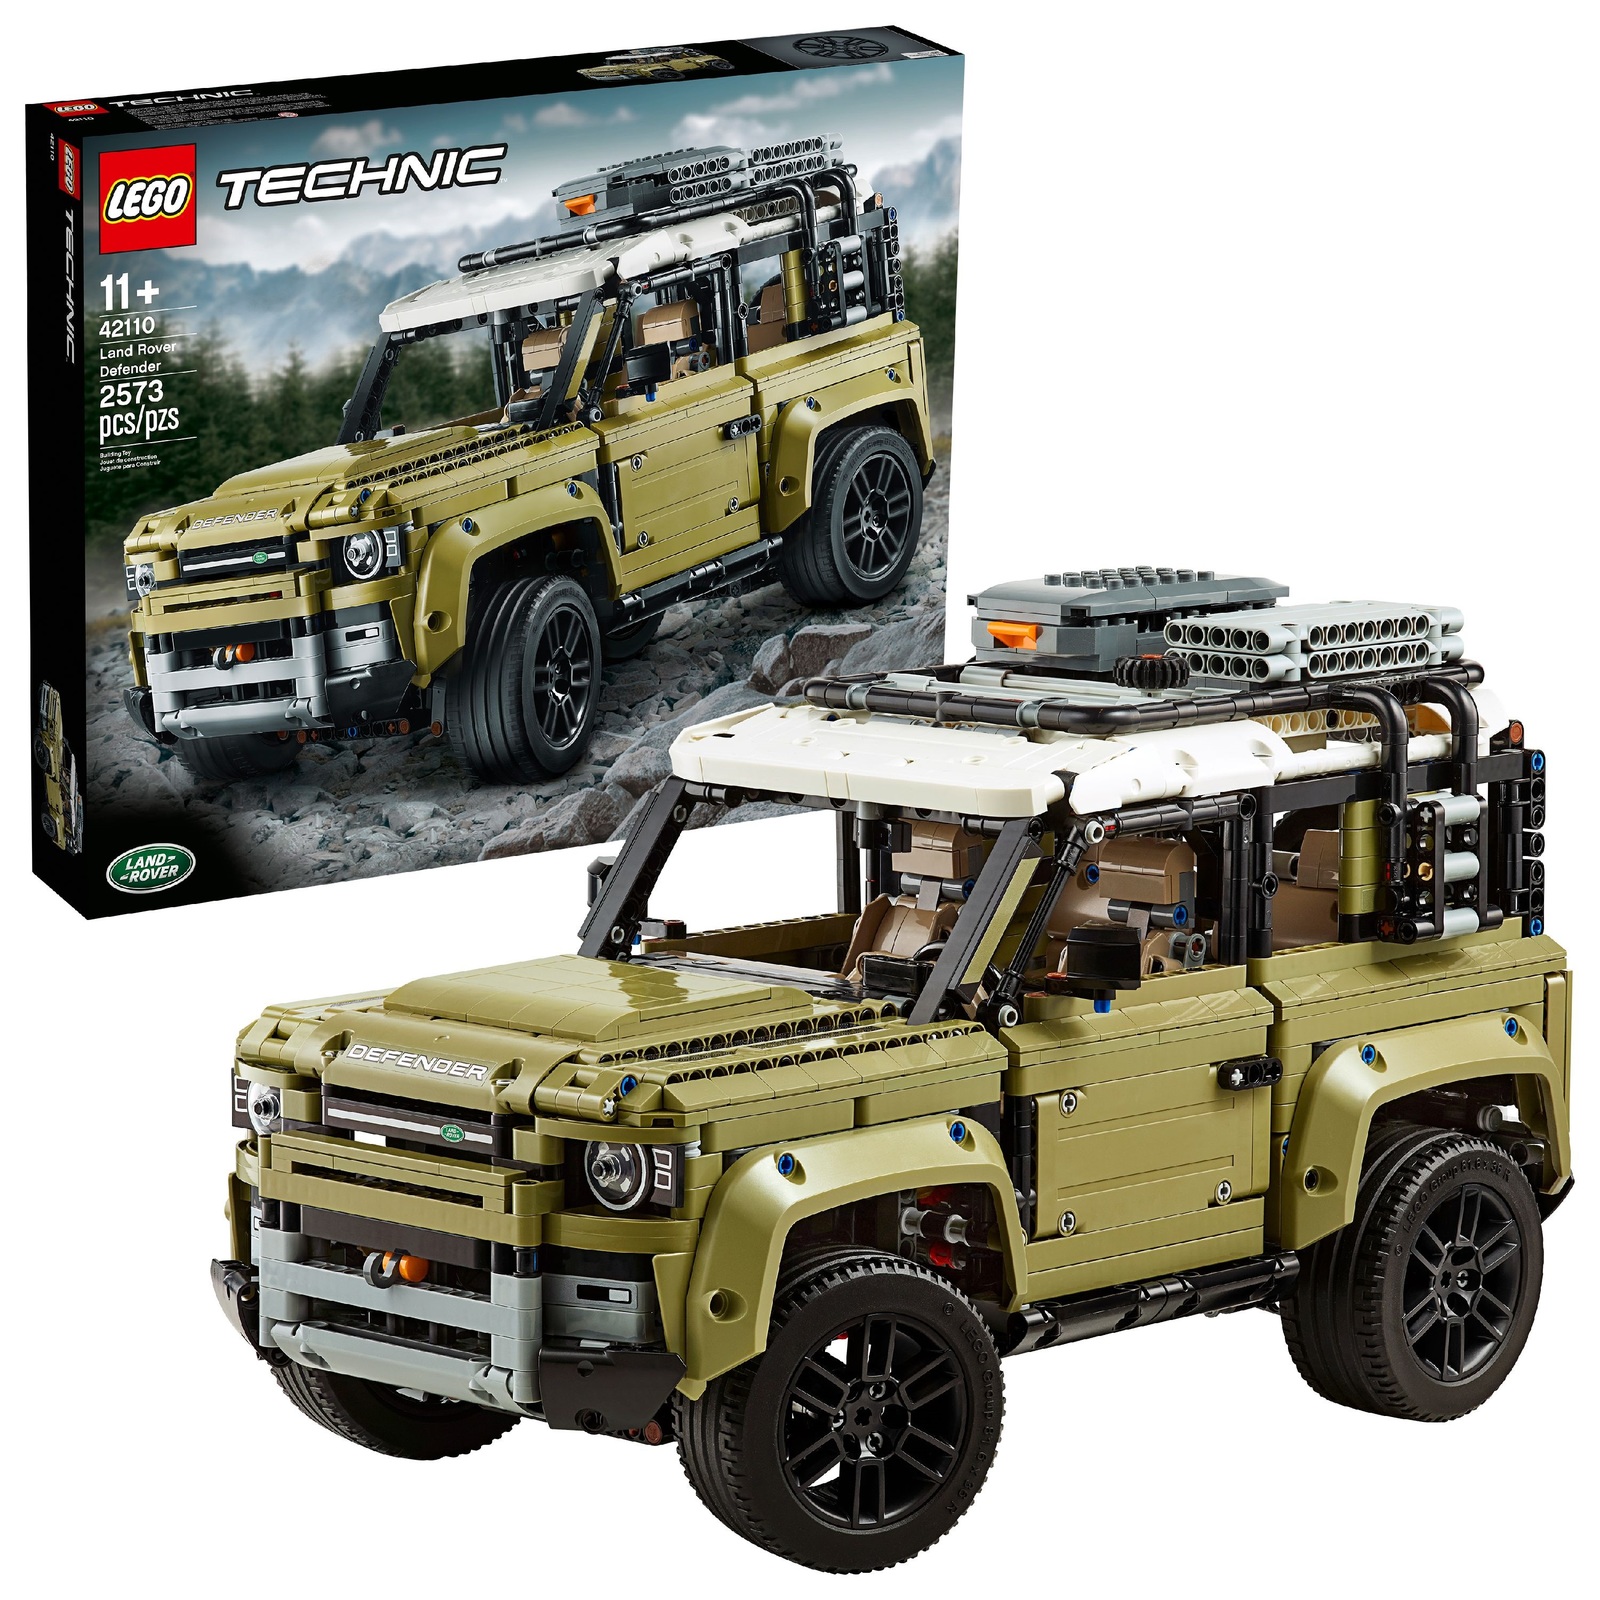 LEGO Technic Land Rover Defender Model 42110 Building Toys Set (2573 Pieces)